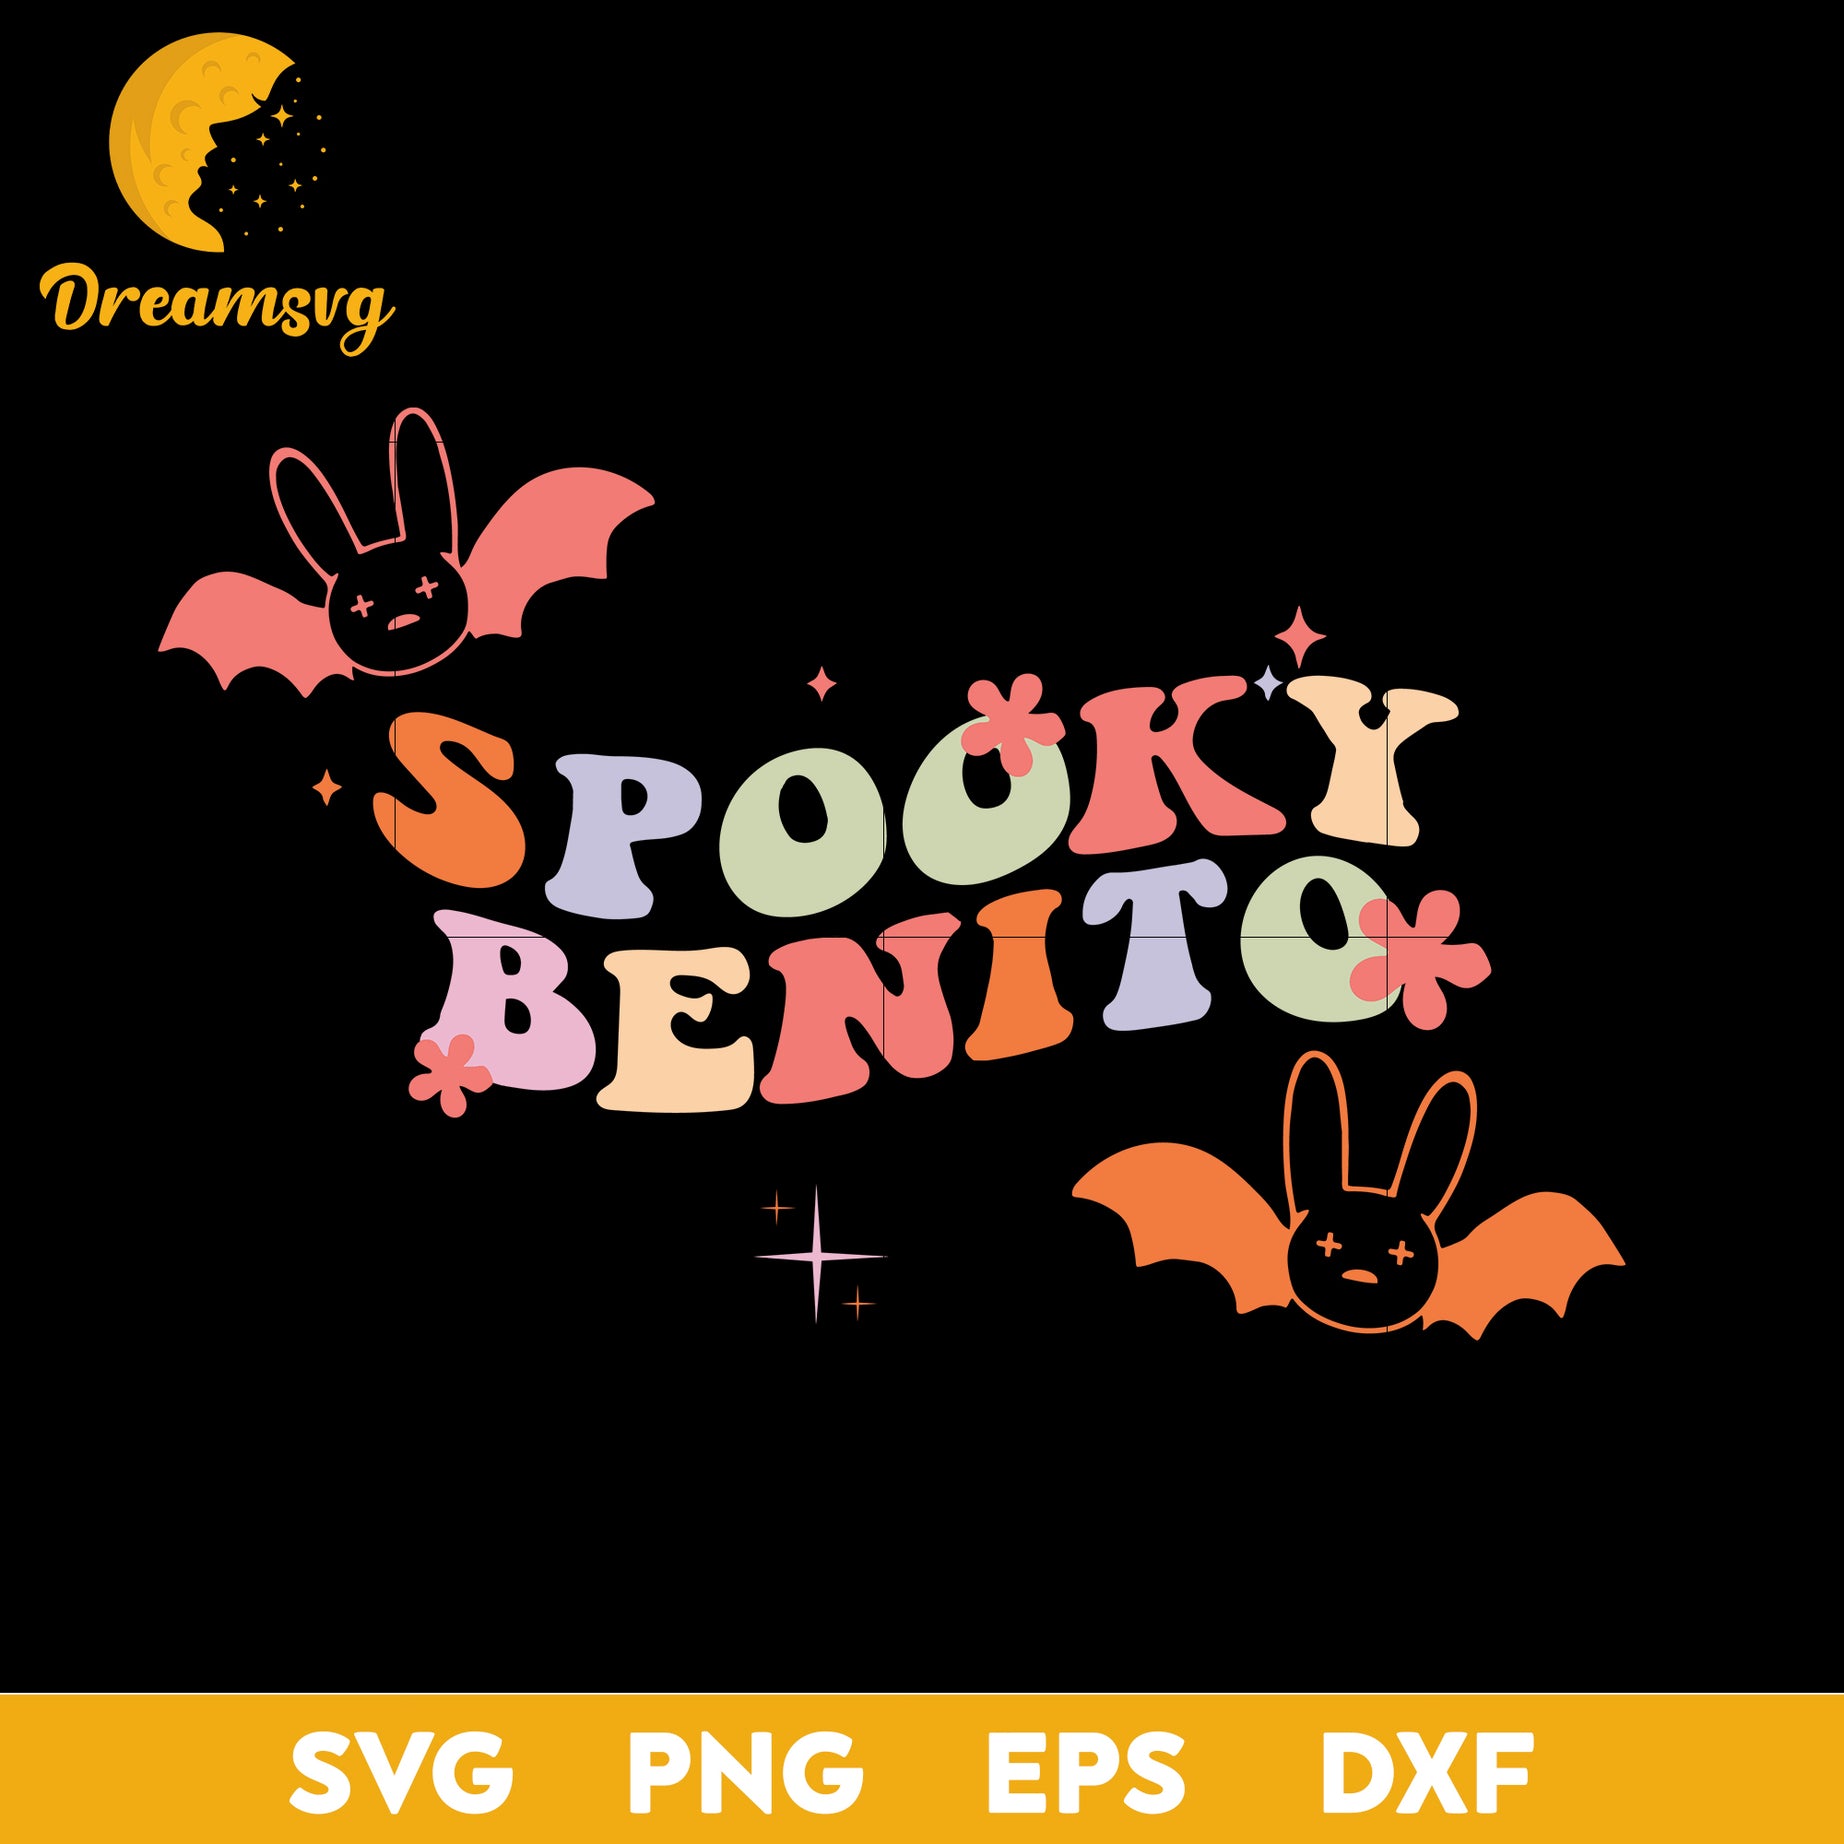 Spooky Benito Svg, Un Verano Sin Ti Svg, Halloween Svg, png, dxf, eps digital file